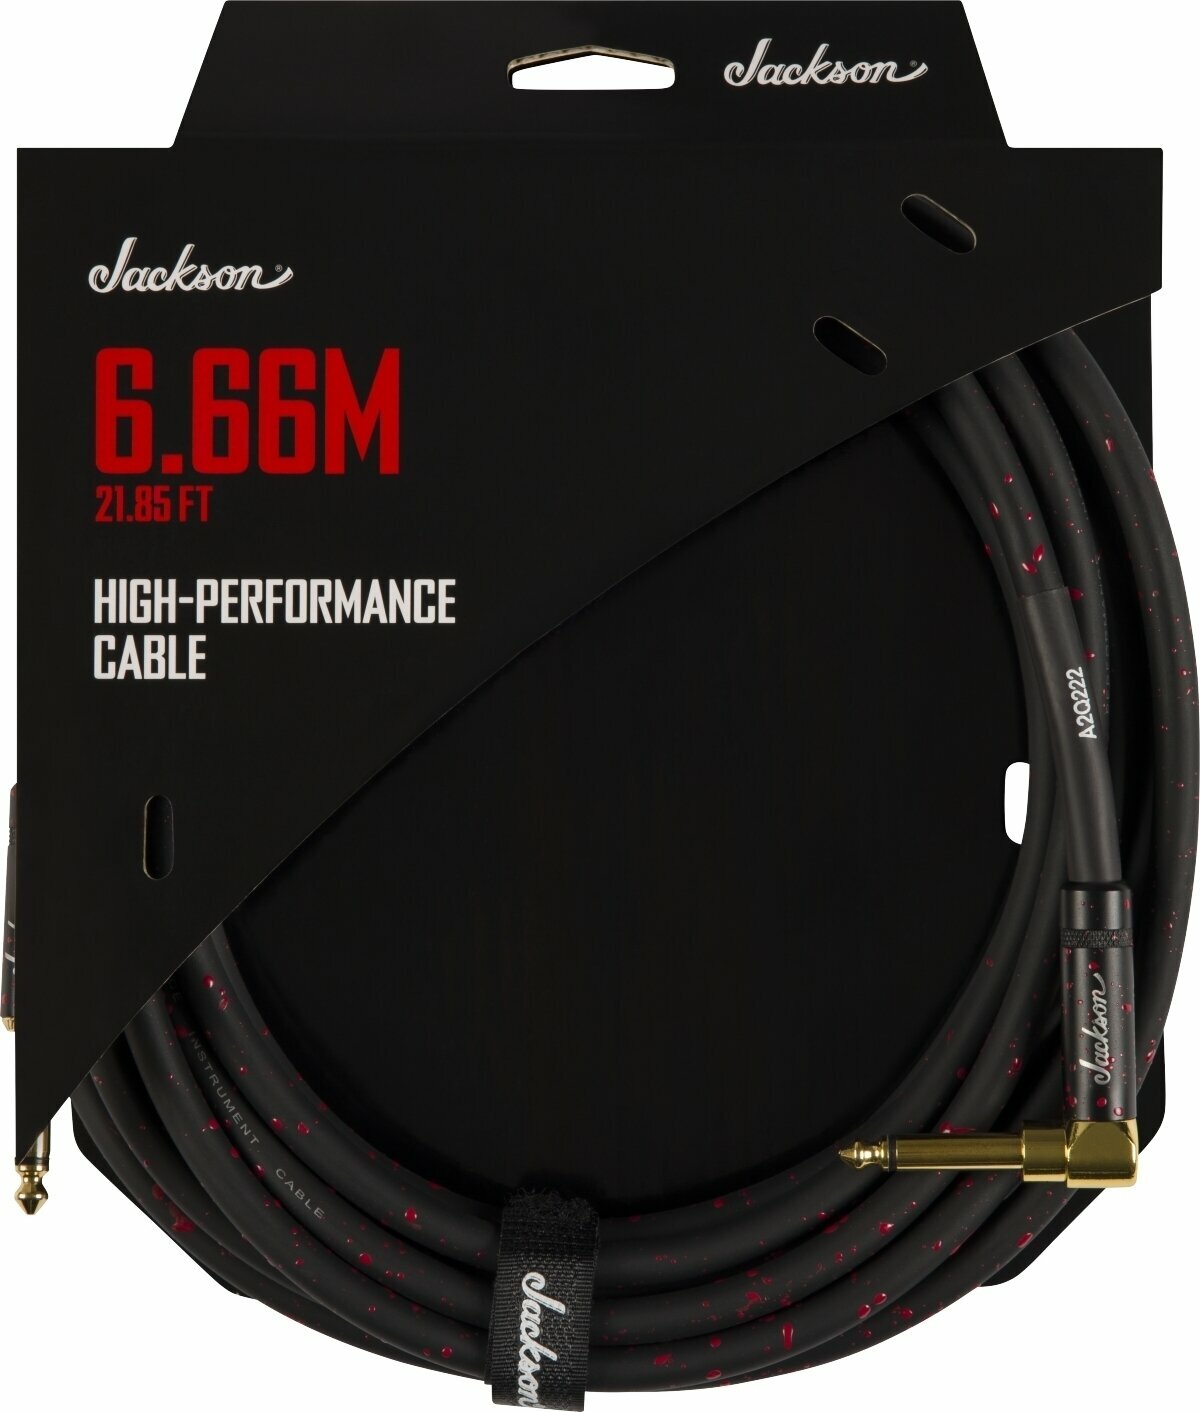 Instrumentkabel Jackson High Performance Cable Röd-Svart 6,66 m Rak-vinklad